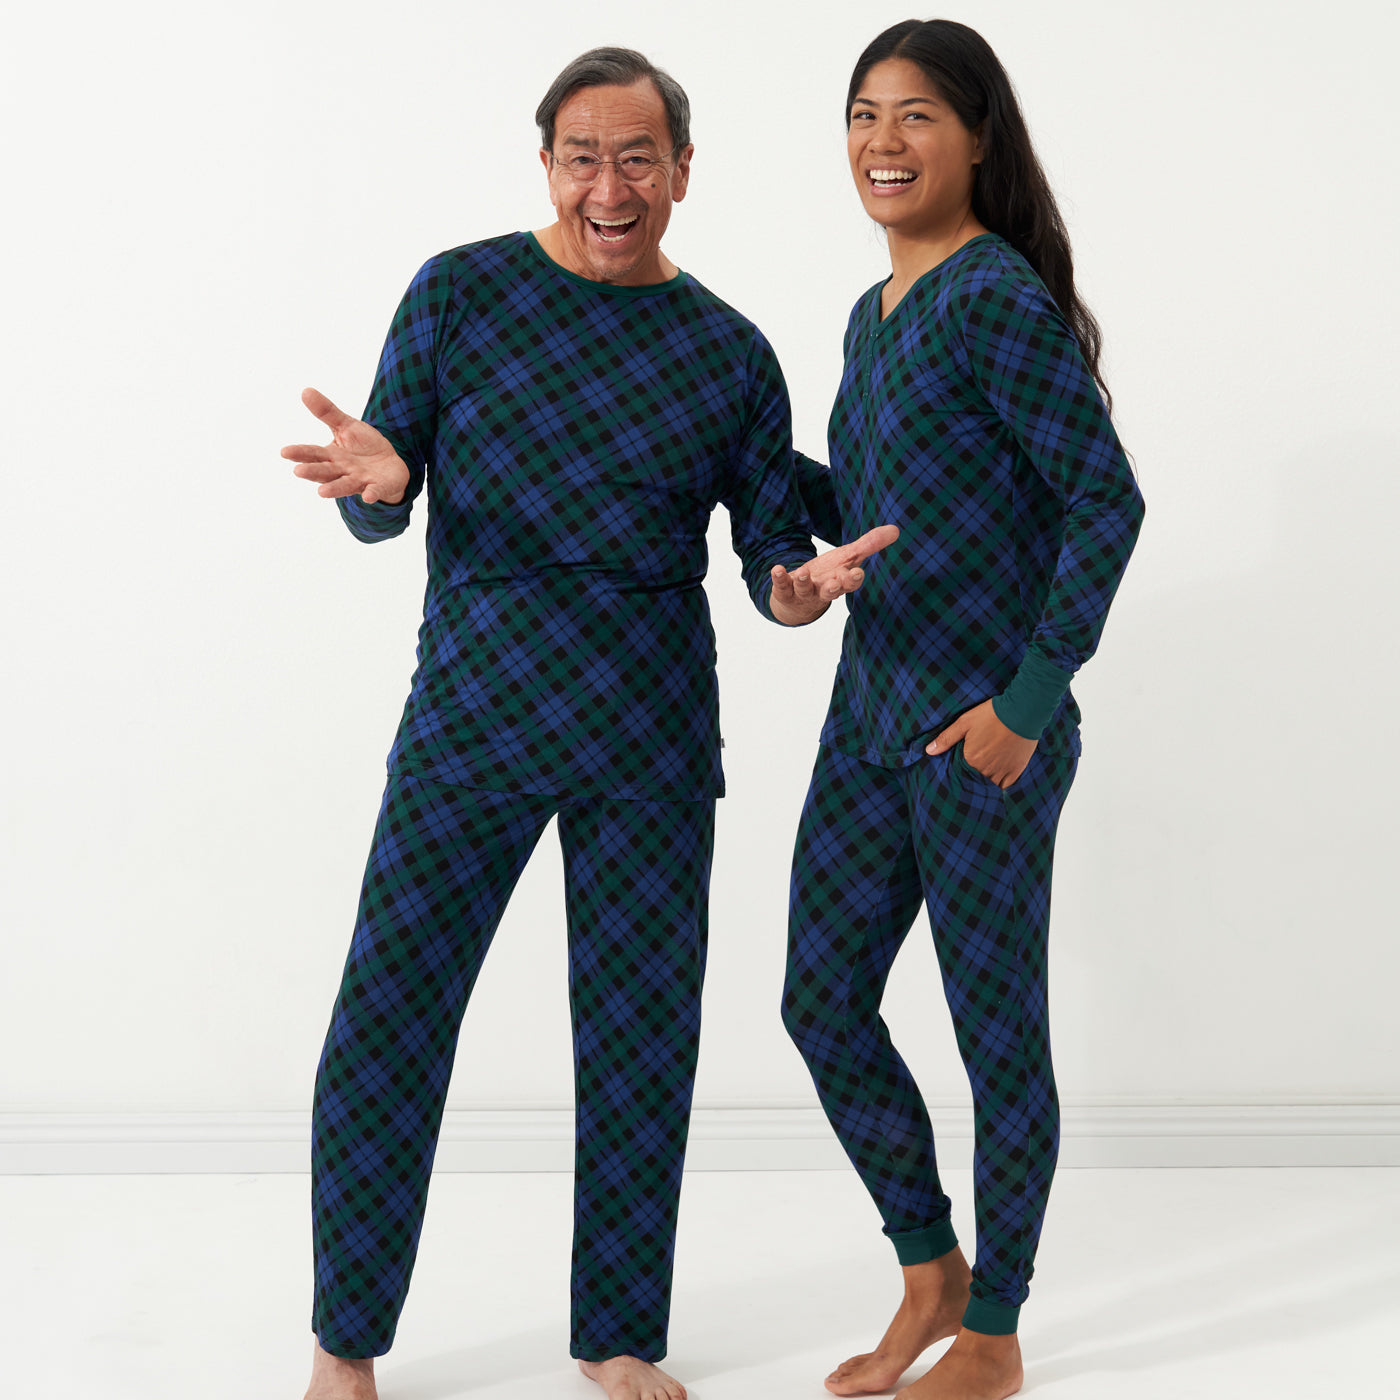 Alternate image of a man and woman wearing matching Emerald Plaid pajamas